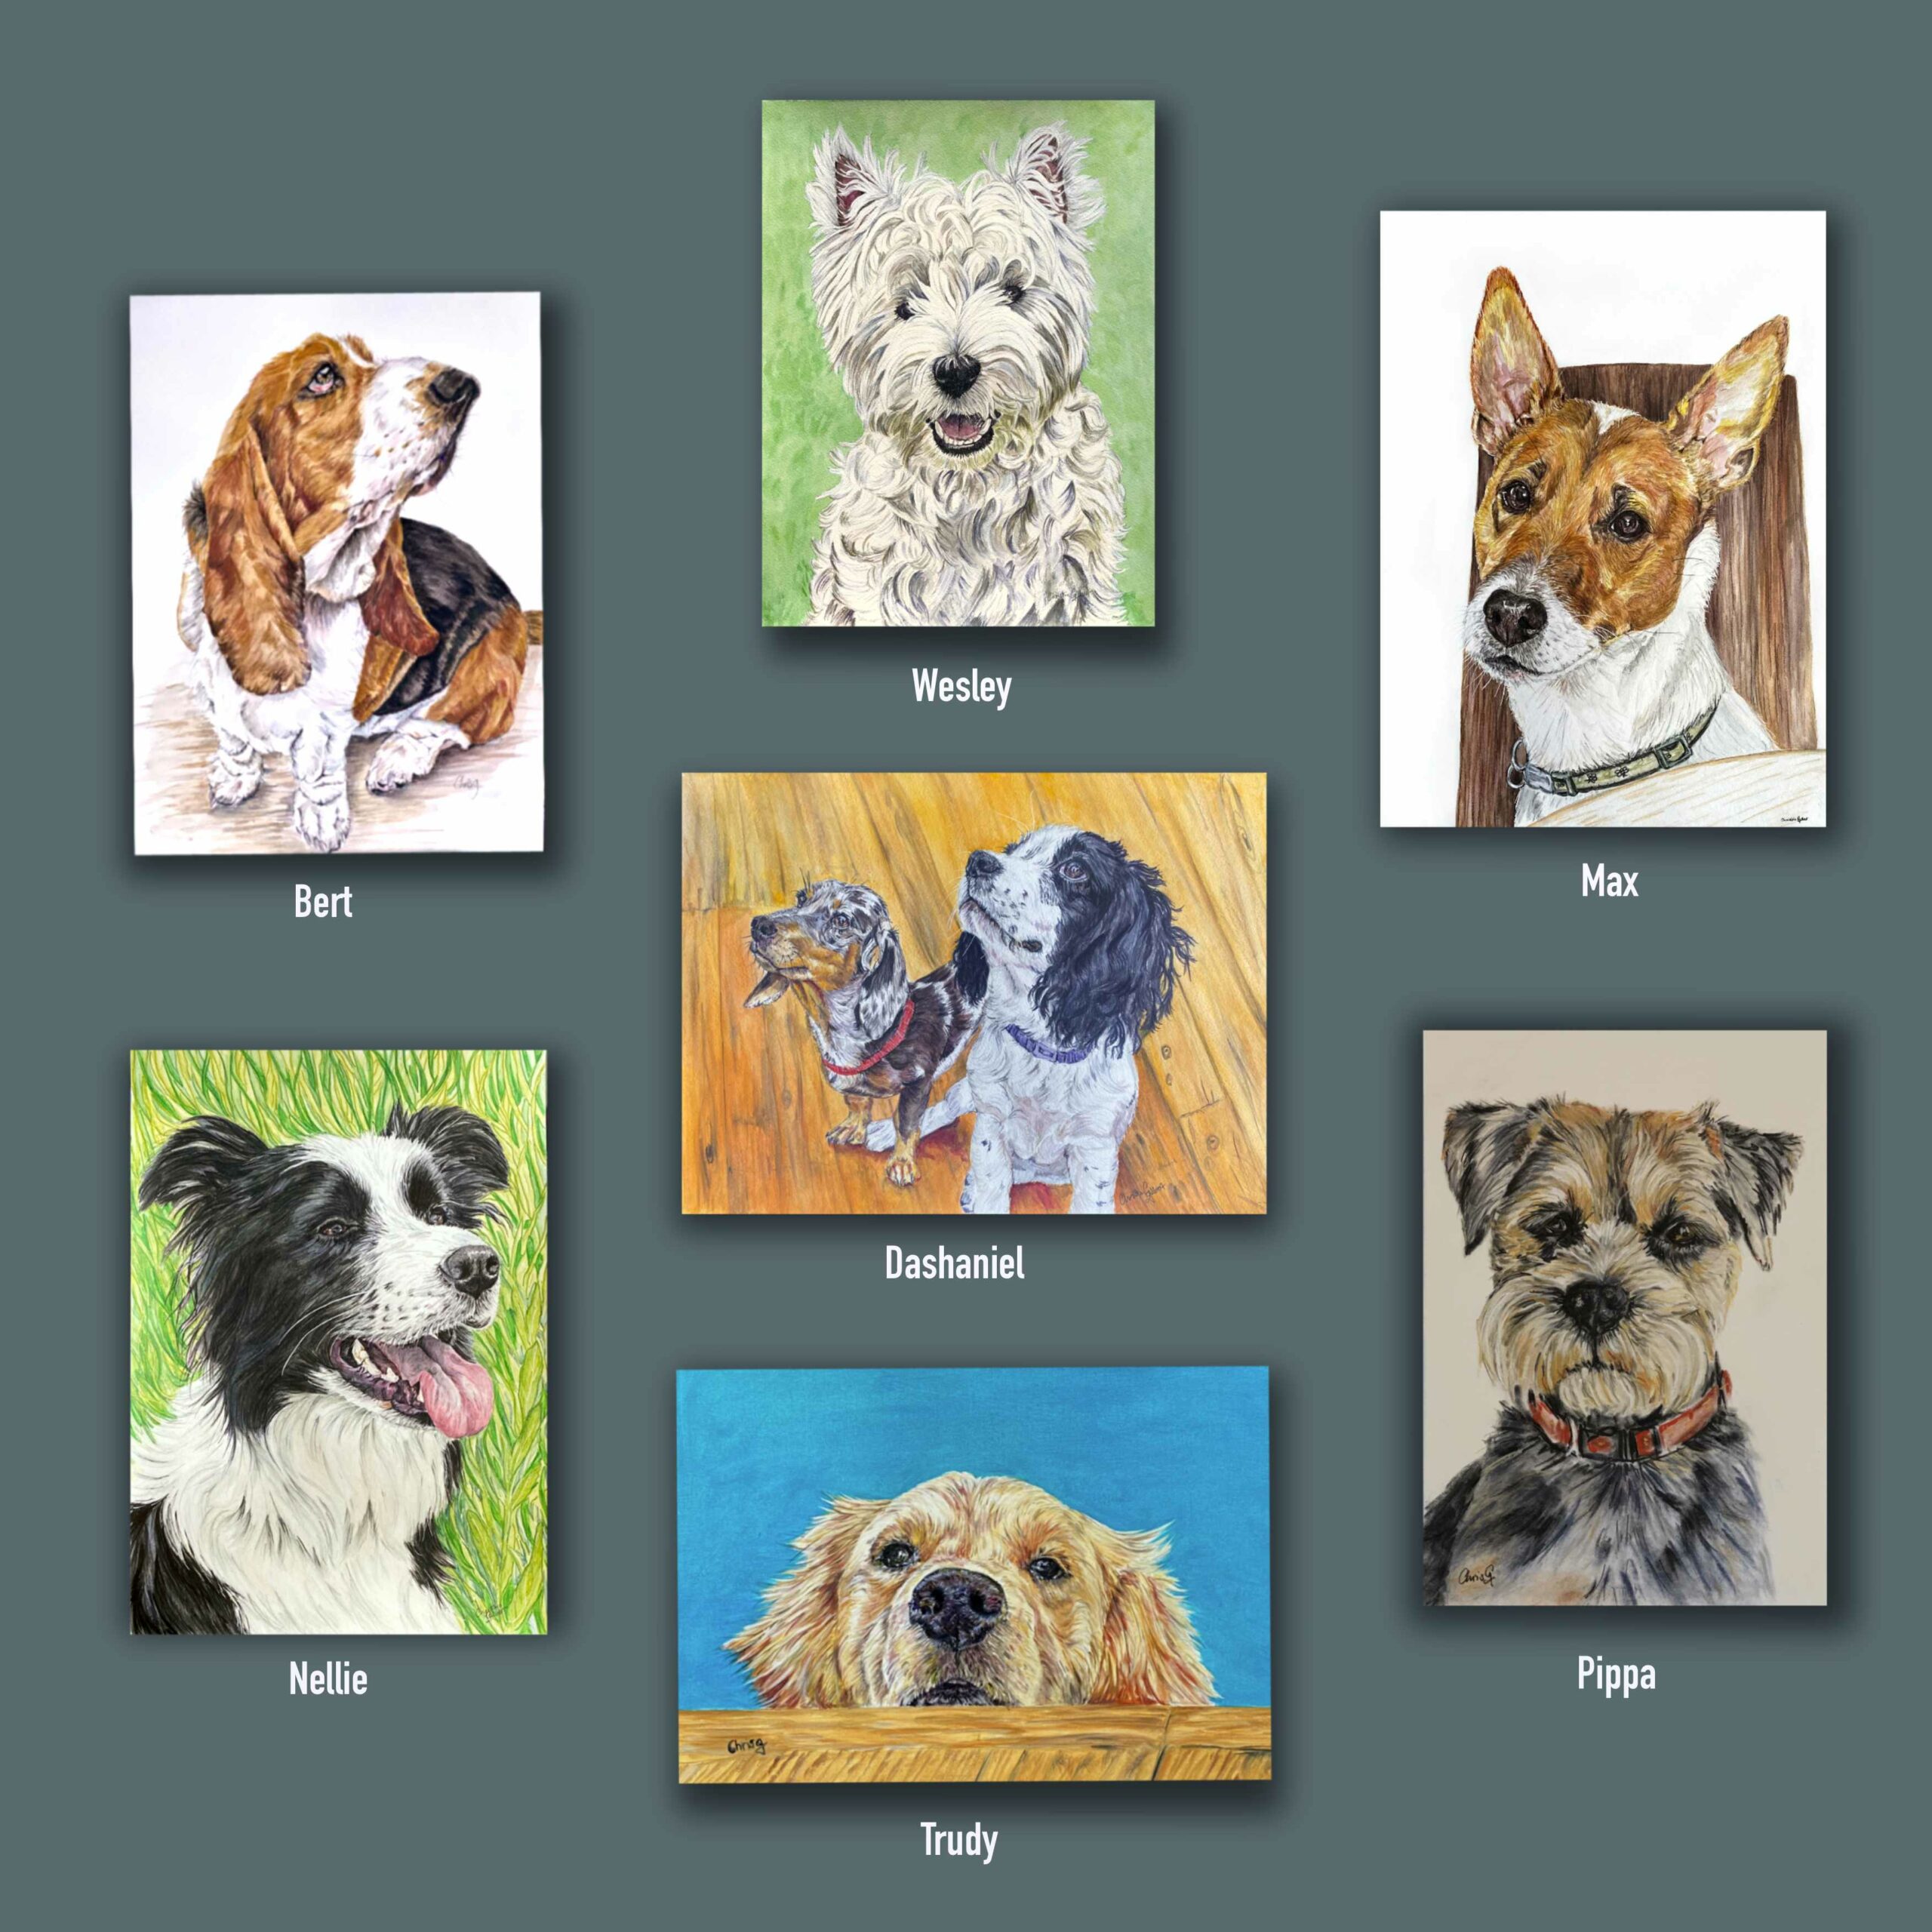 One picture with 7 individual Dog portraits.
Bert-Basset hound
Wesley-westie
Max-Jackrussel
Dashaniel-spaniel and dashound
Nellie-sheepdog
Trudy-Retriever
Pippa-wire haired terrier
